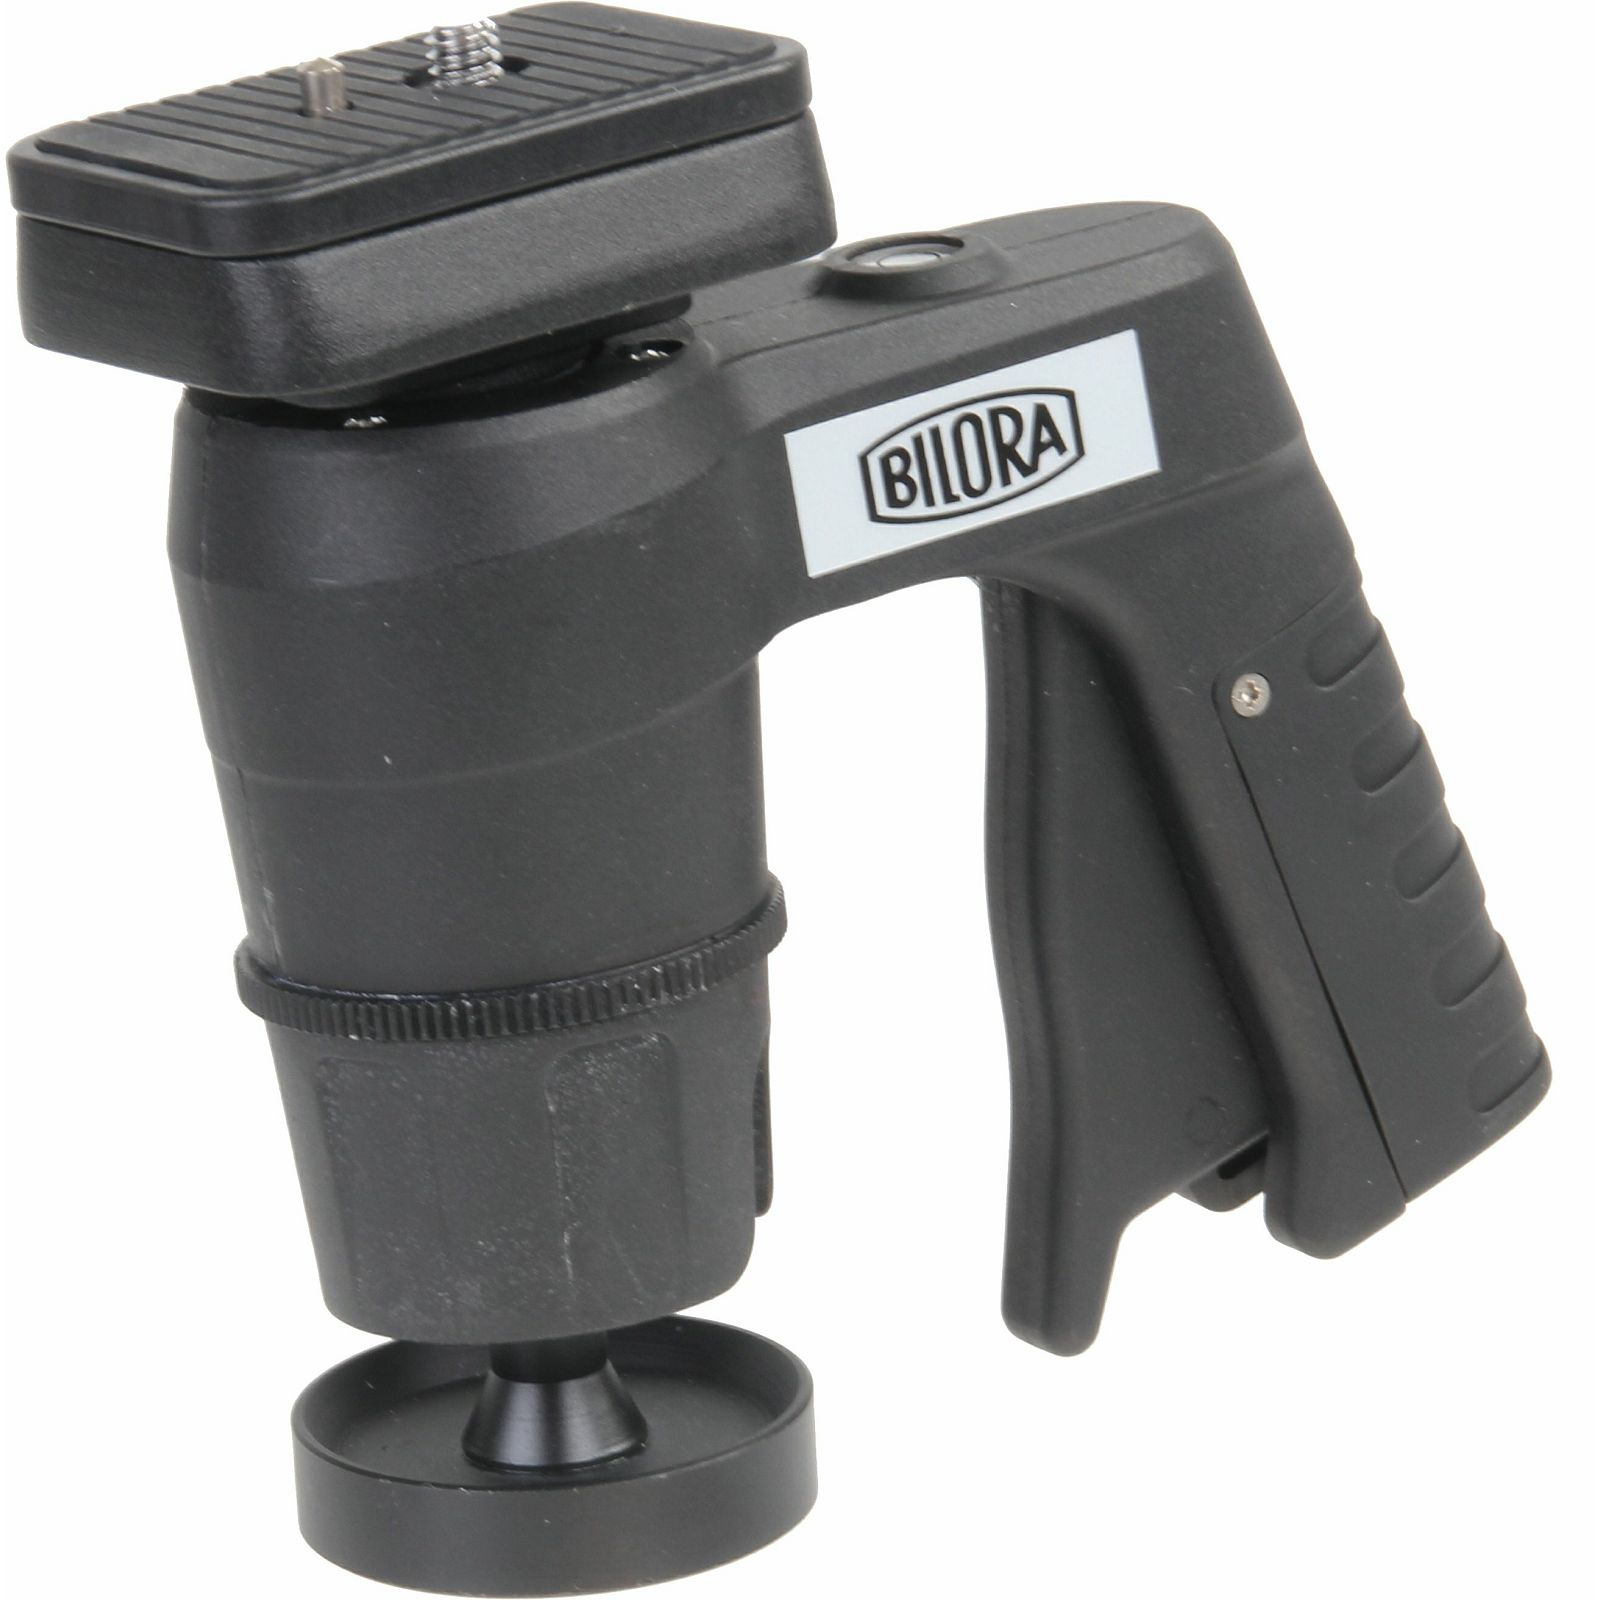 Bilora Lux Pistol Grip Head 5kg pištolj glava stativa za fotoaparat (3215)